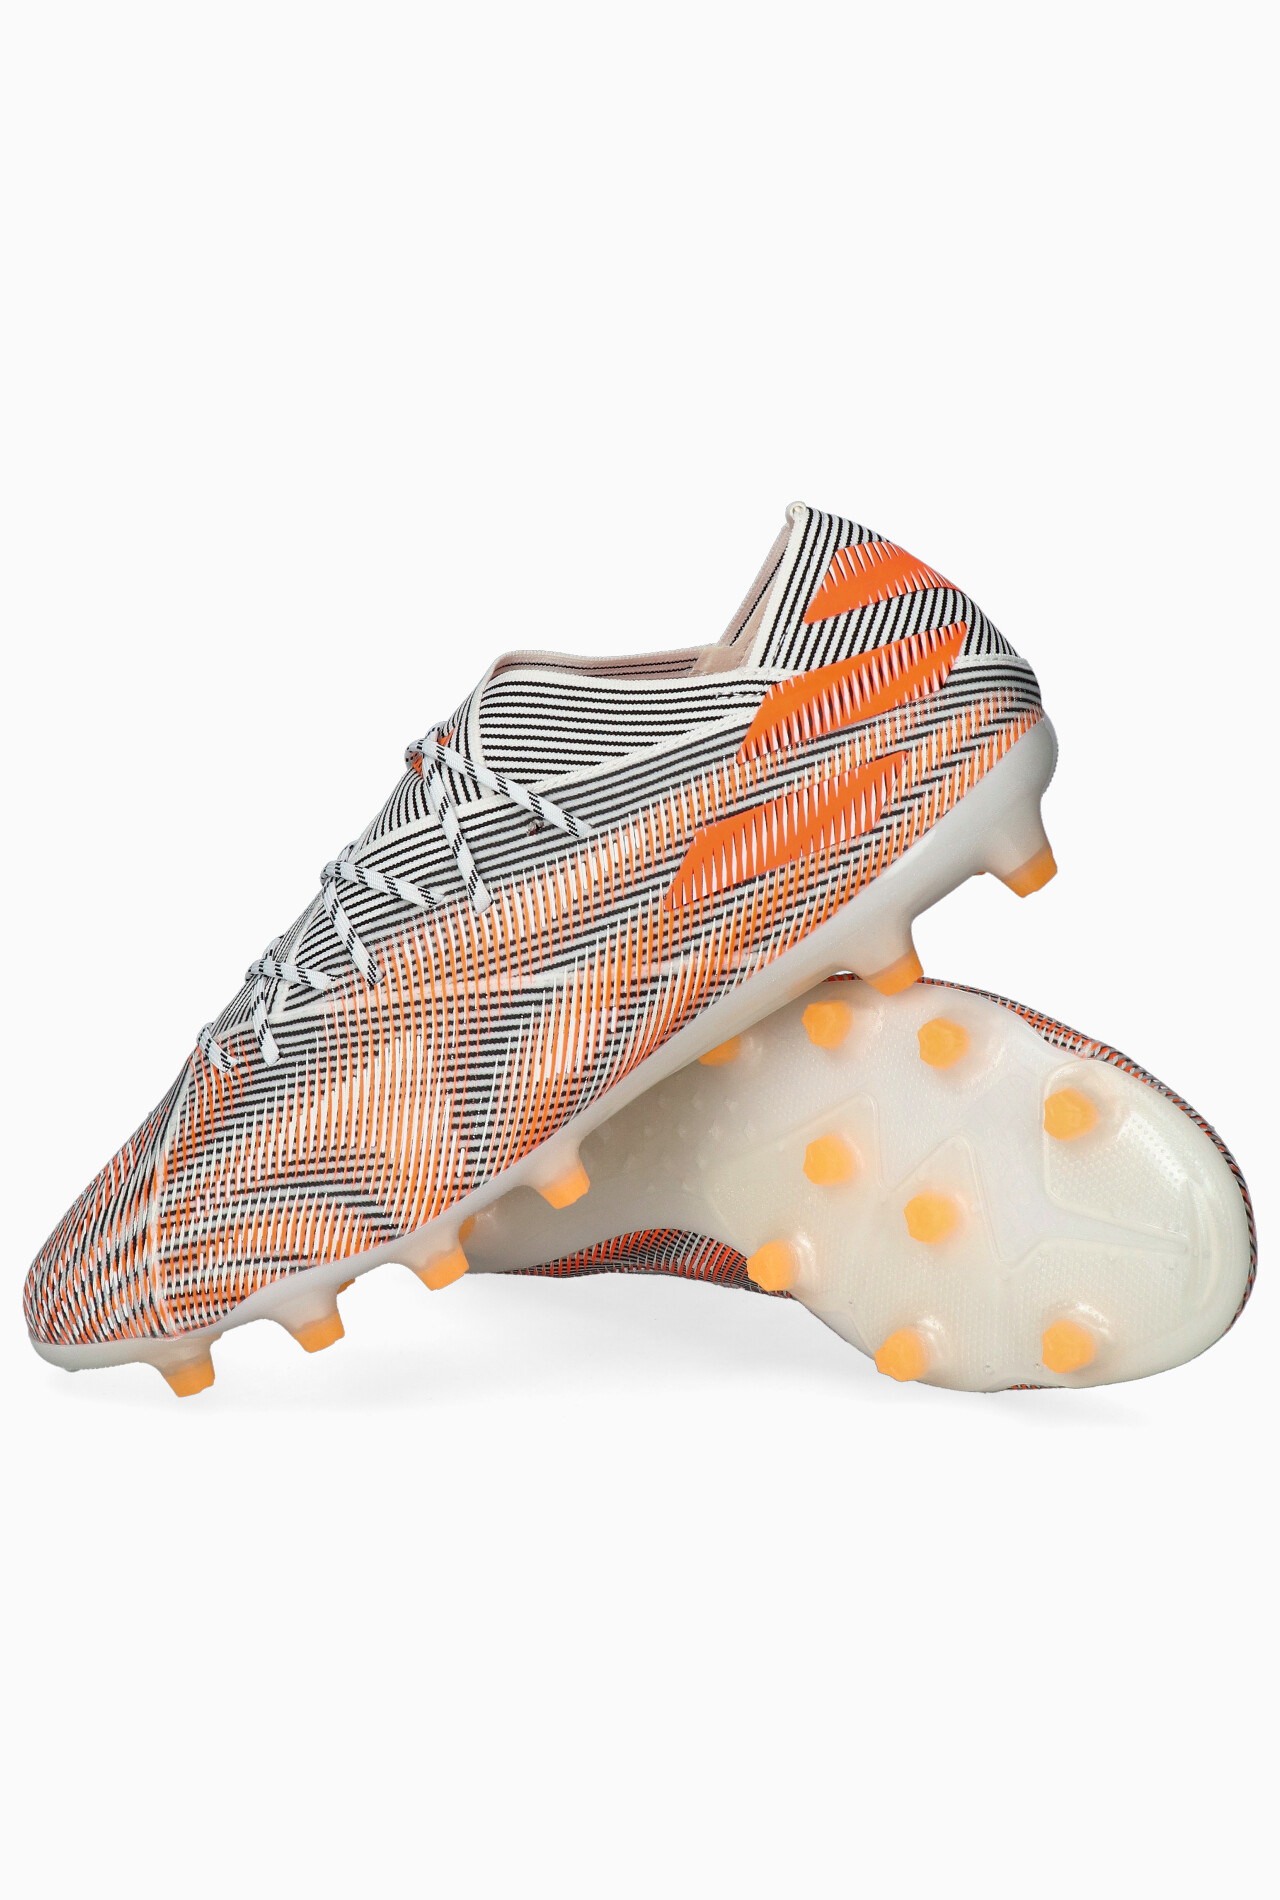 Cleats adidas NEMEZIZ.1 AG | R-GOL.com - Football boots \u0026 equipment